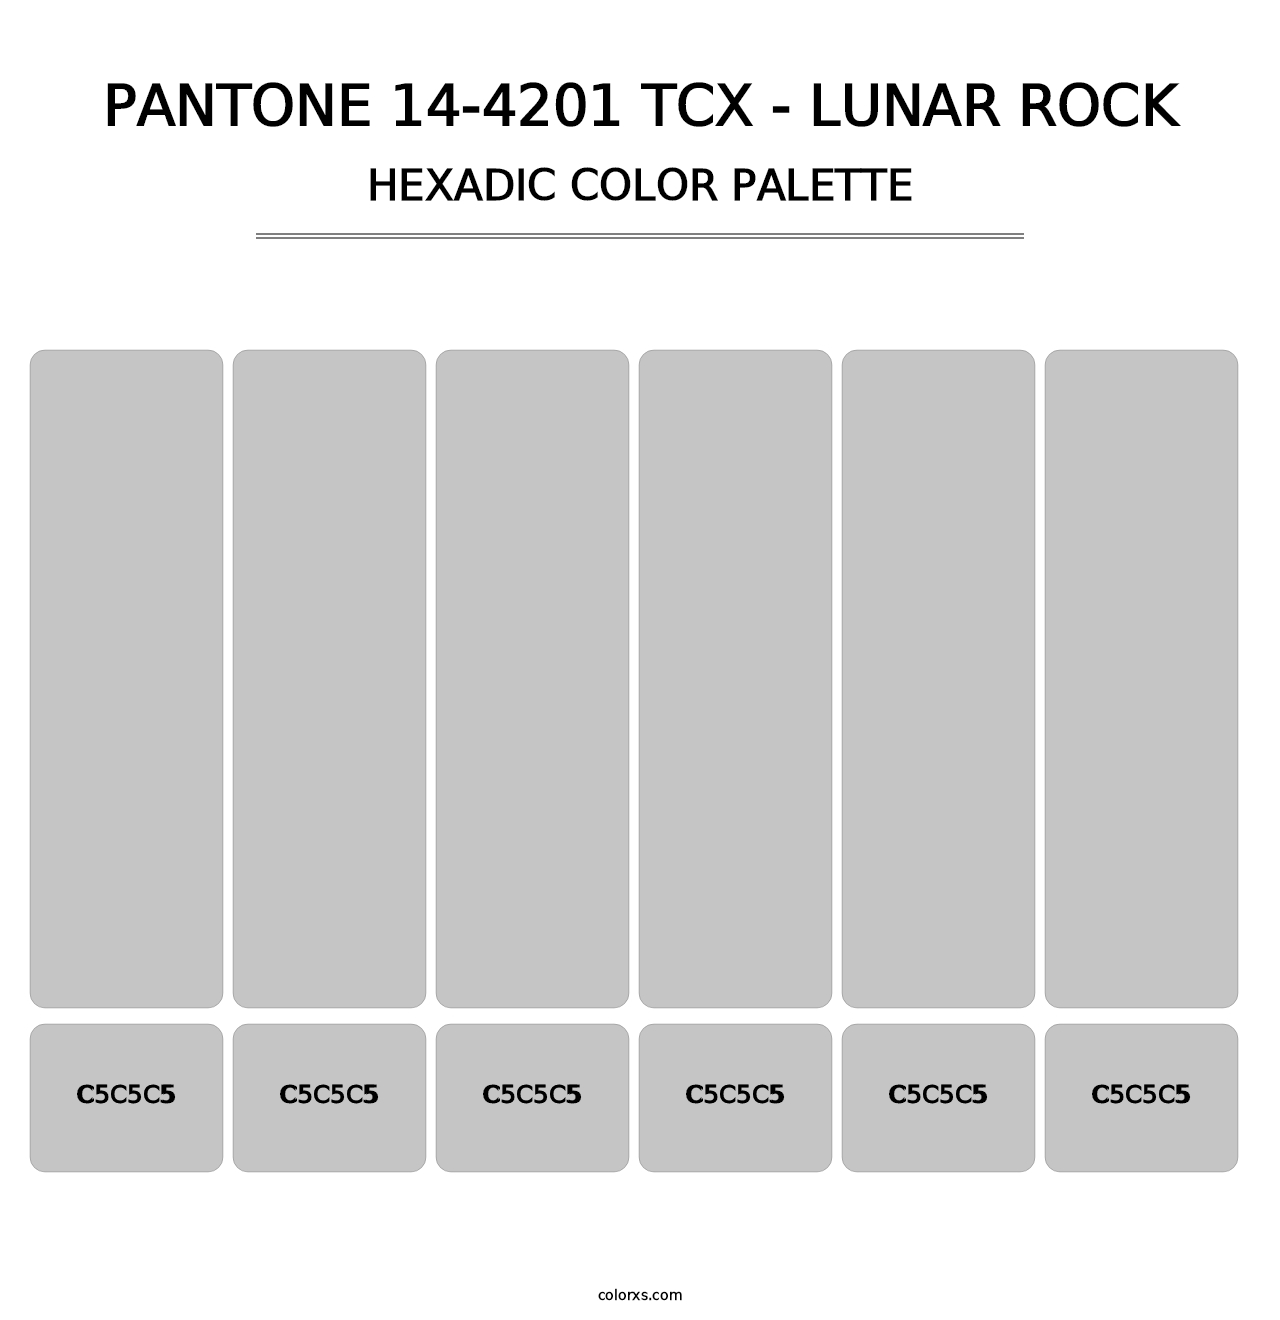 PANTONE 14-4201 TCX - Lunar Rock - Hexadic Color Palette